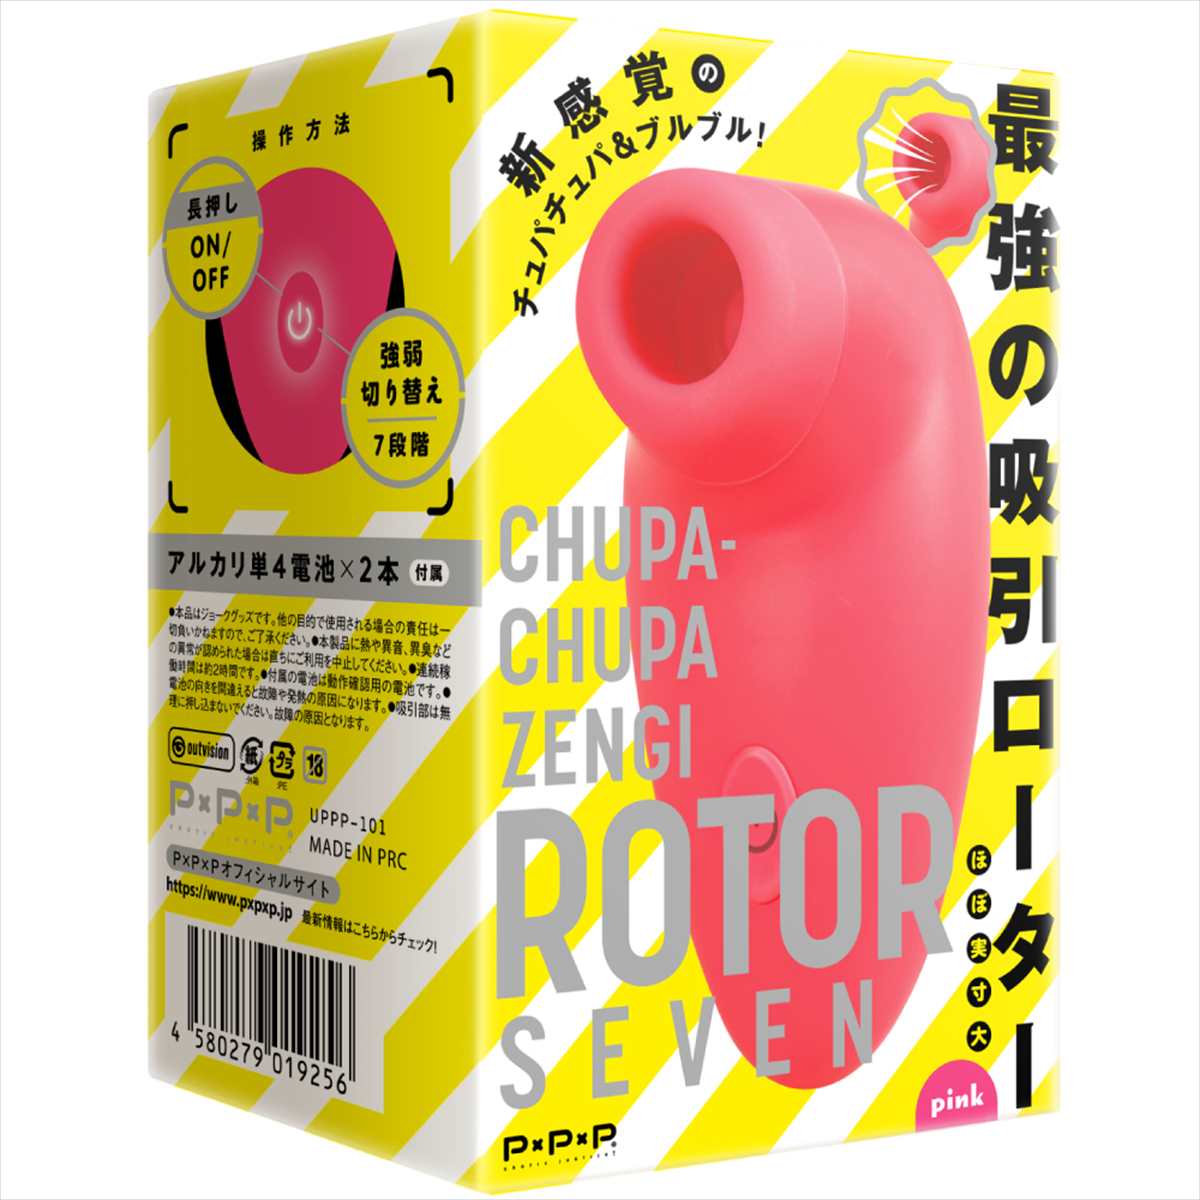 CHUPA-CHUPA ZENGI ROTOR SEVEN [チュパチュパ ゼンギ ローター7] pink